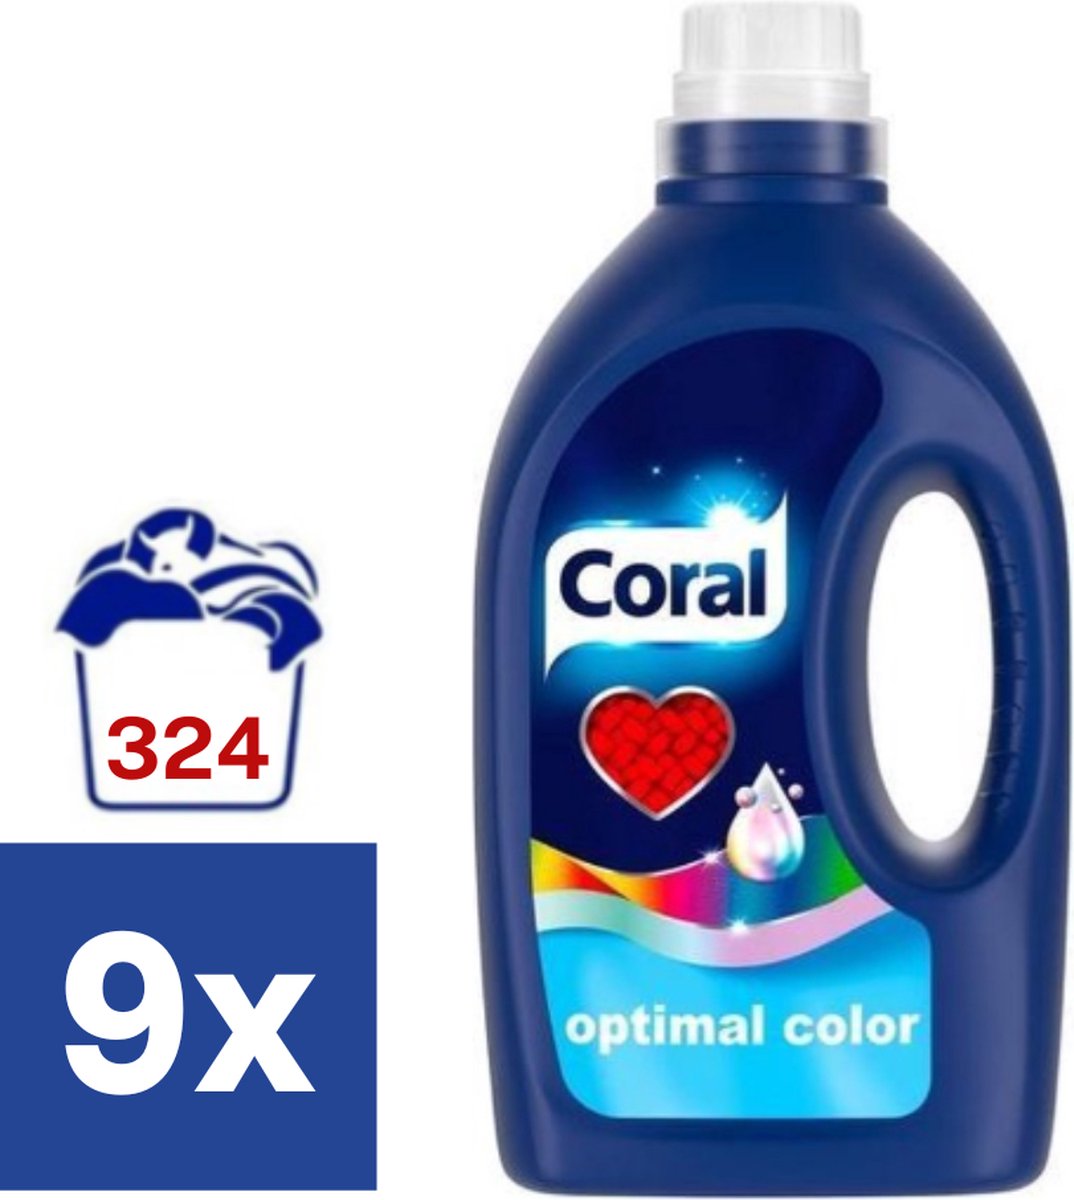 Coral Optimal Color Vloeibaar Wasmiddel - 9 x 1.728 l (324 wasbeurten)